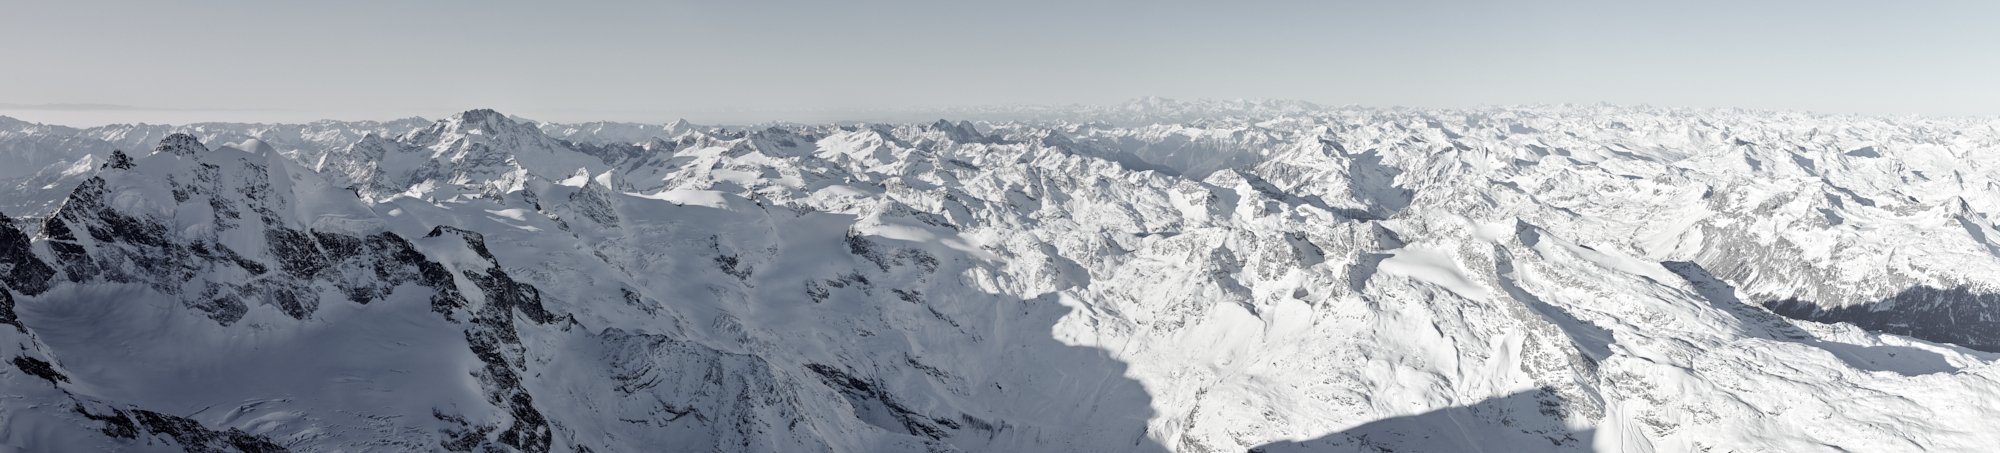 Panoramablick vom Gipfel des Piz Bernina